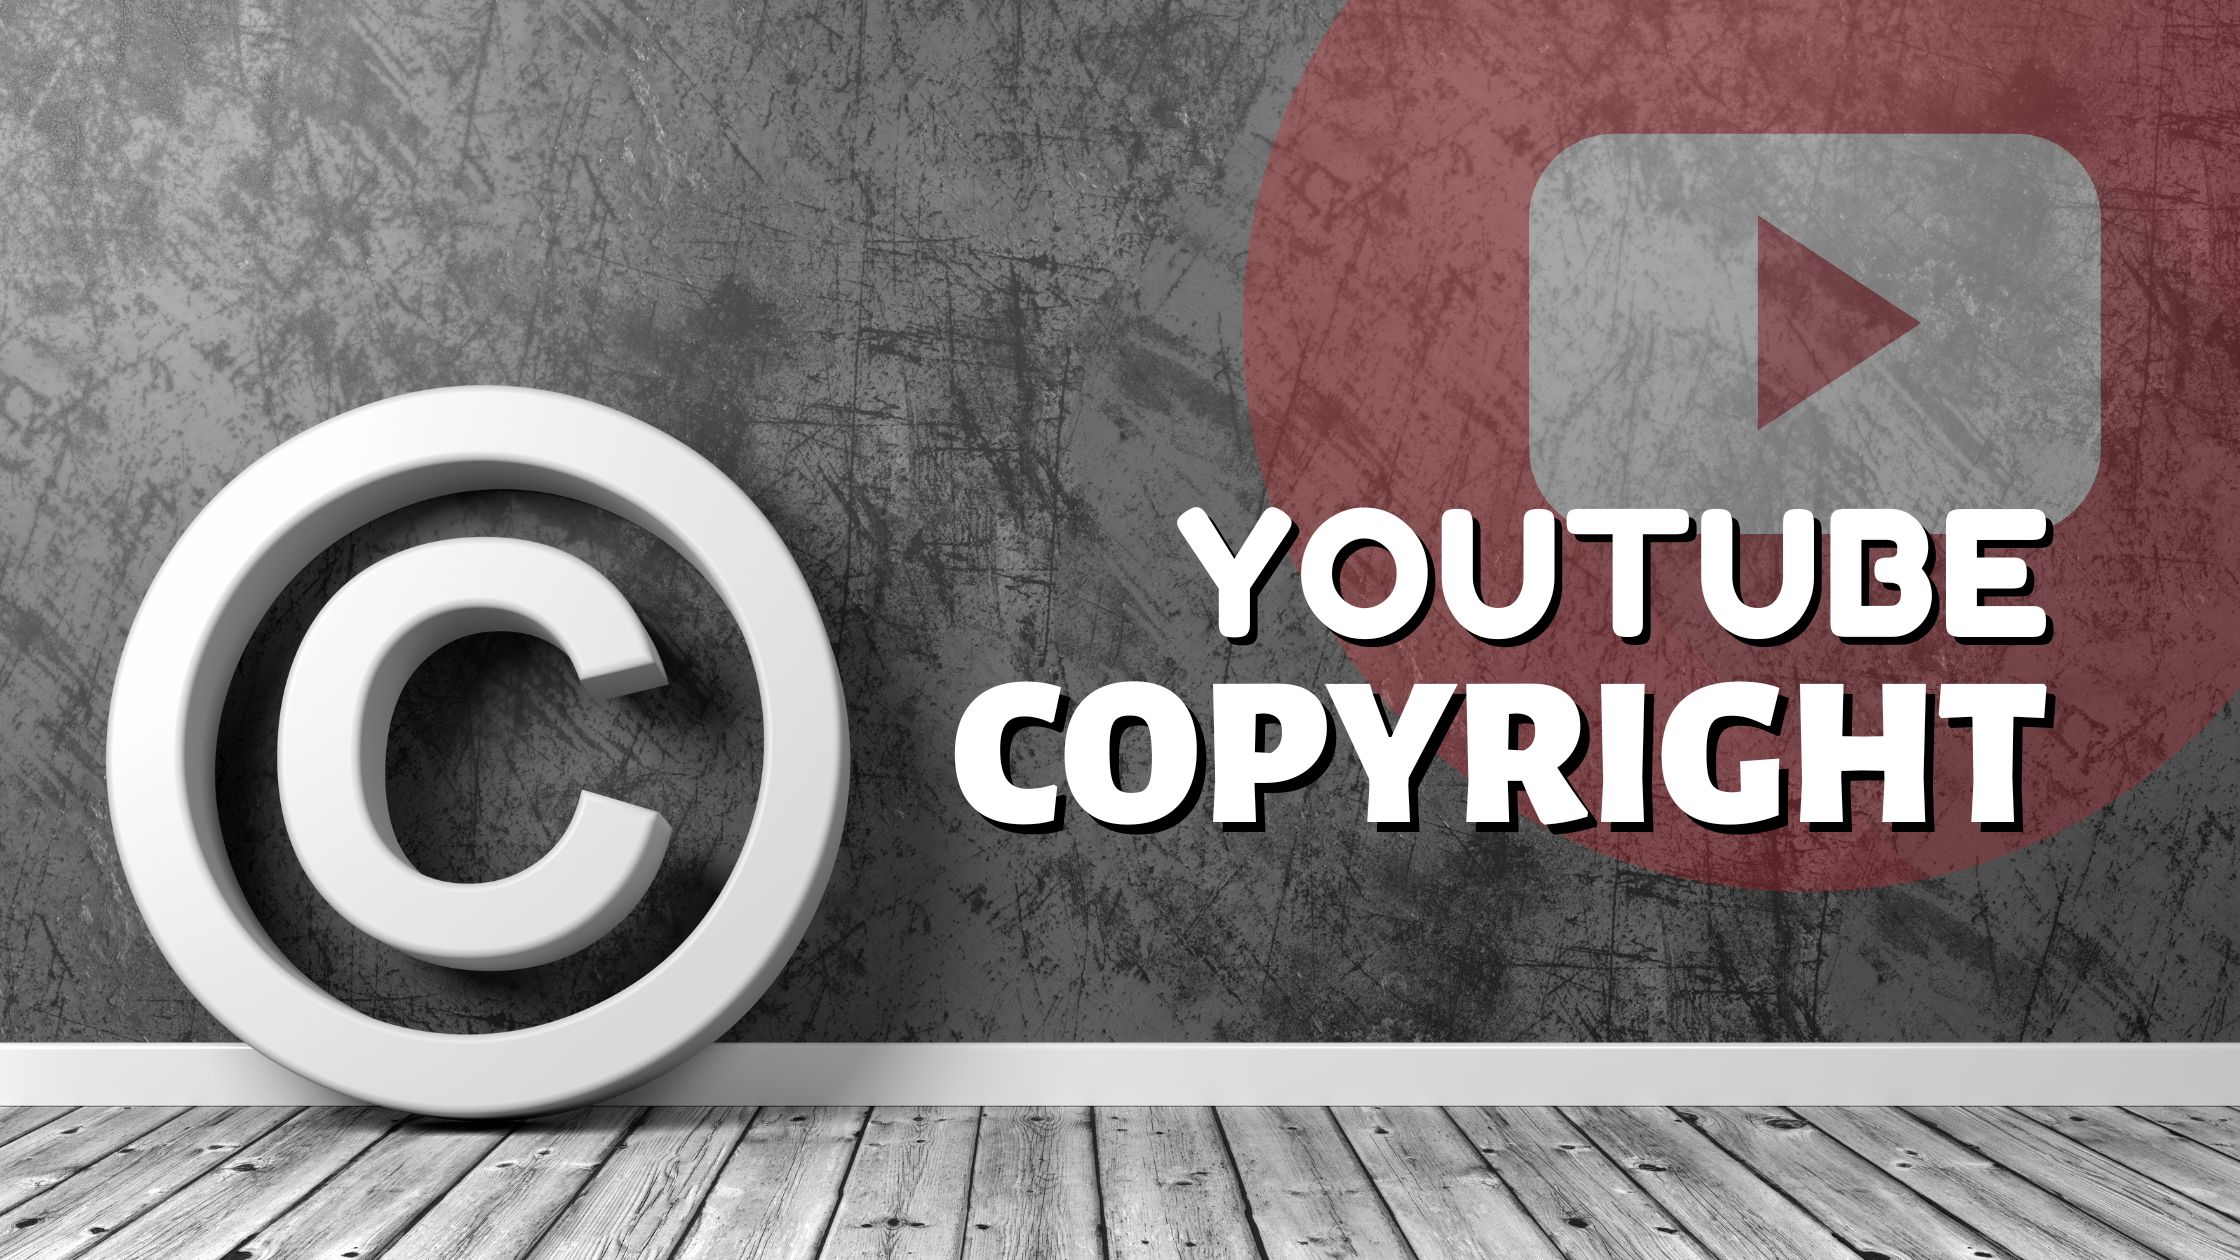 YouTube Copyright